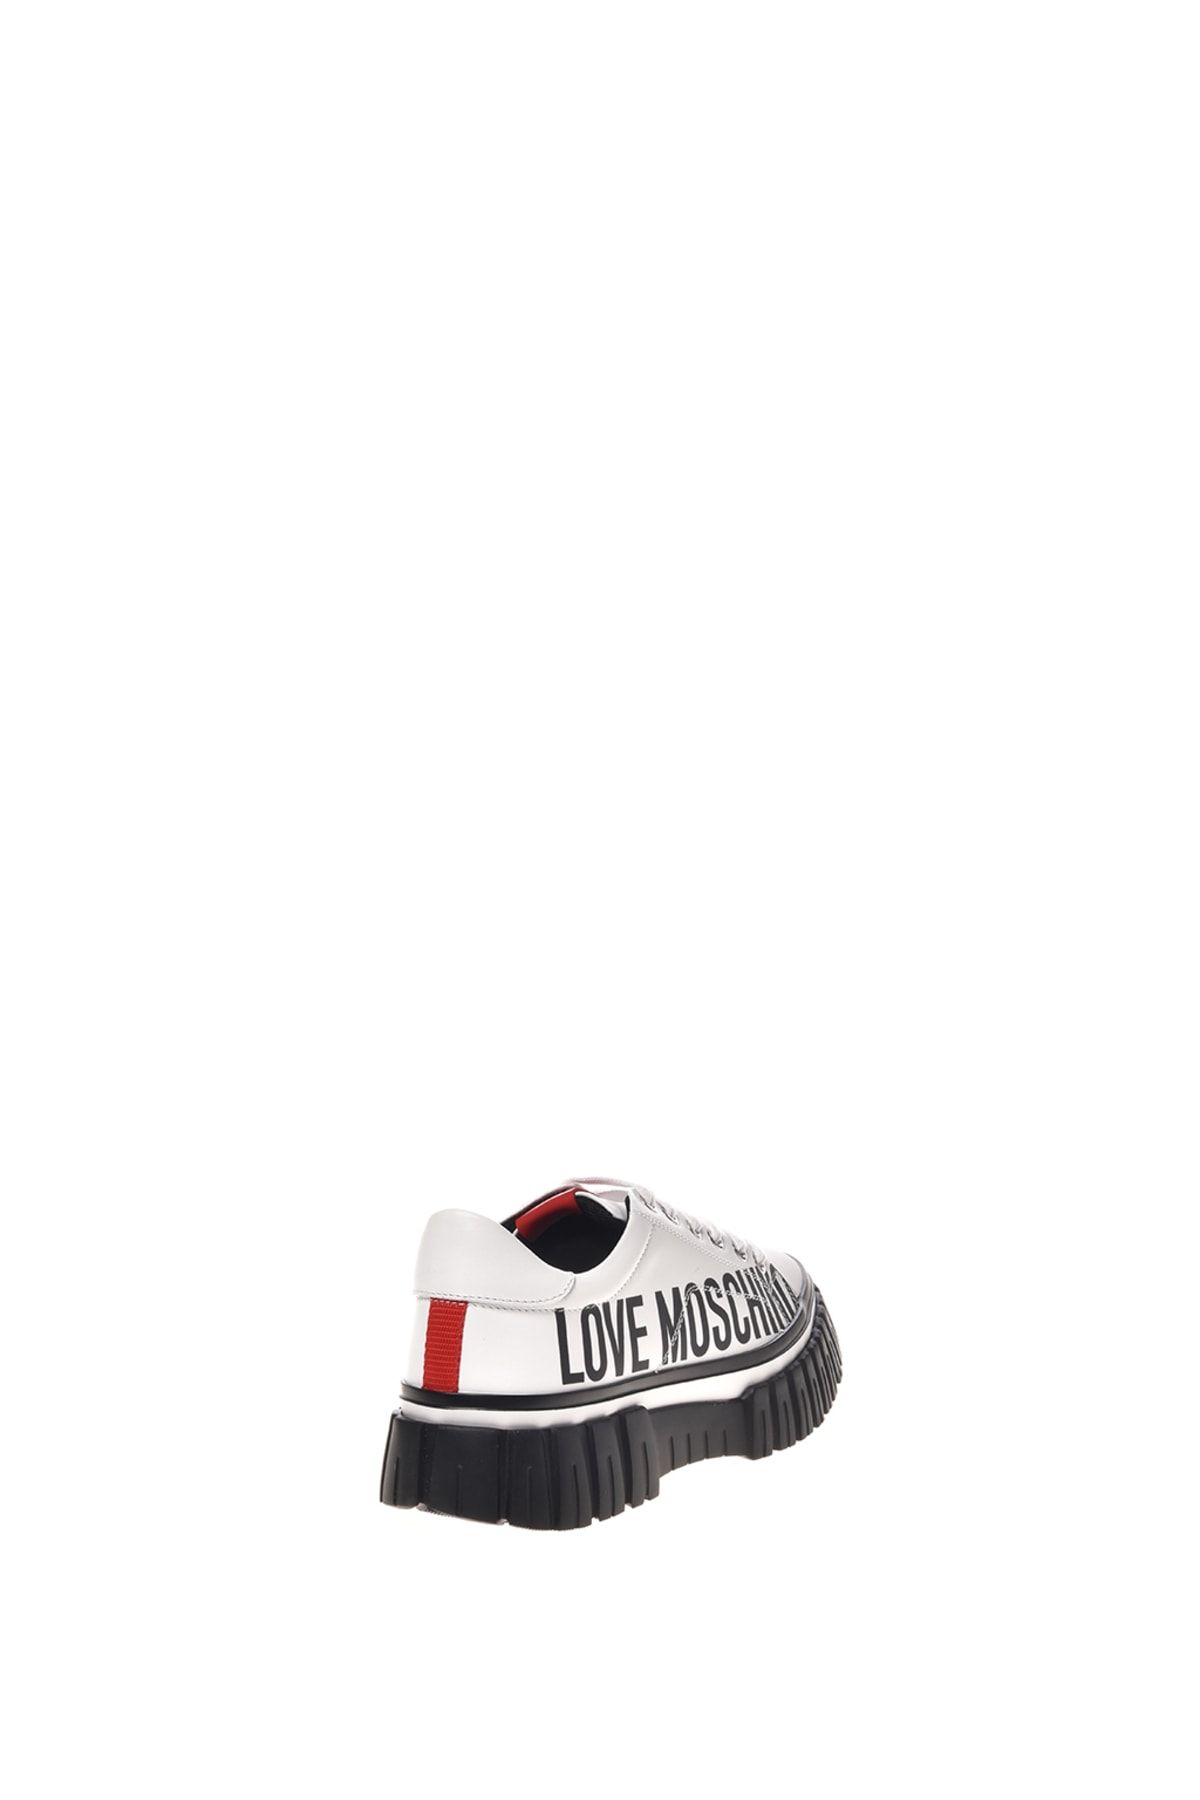 Moschino Beyaz - Sneakerd.gomma55 Vıt.nero/nero Ja15705g0f